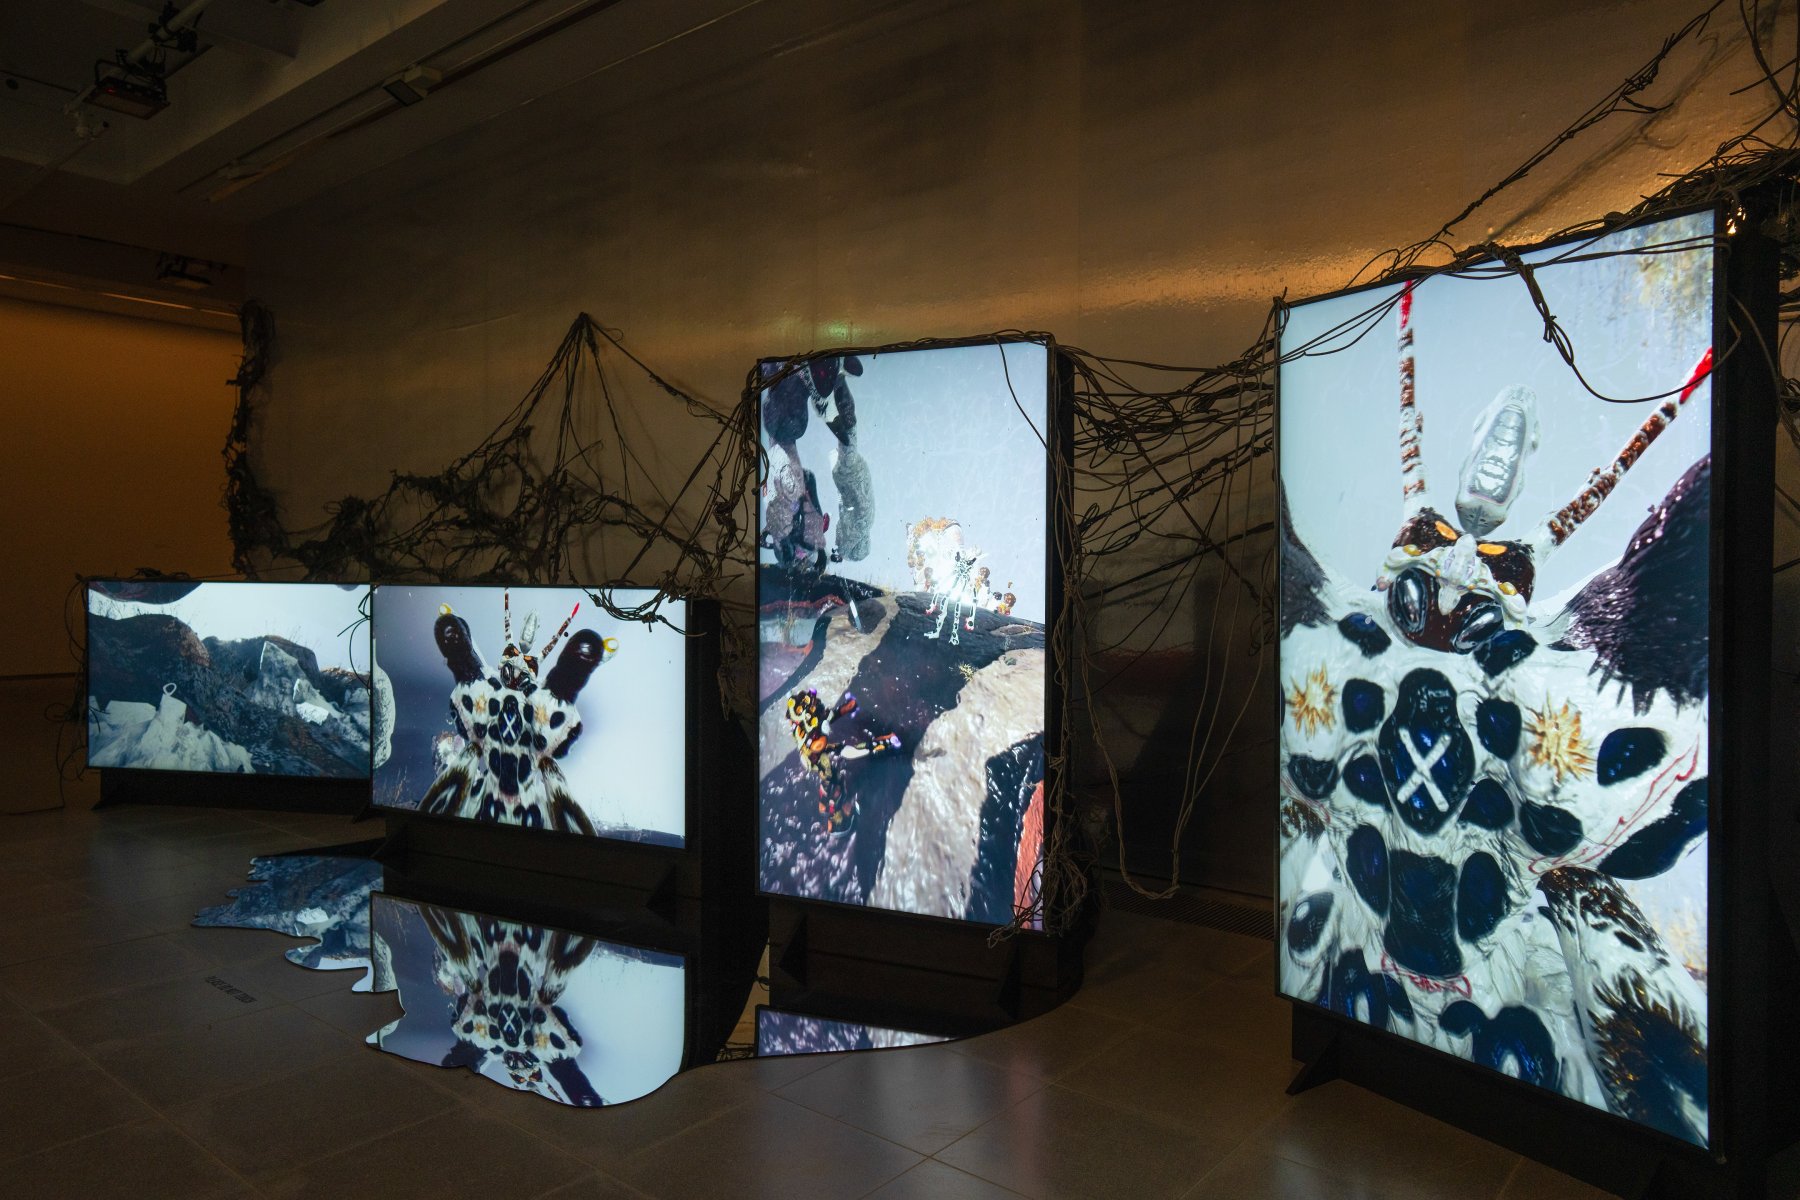 Installation image for Gabriel Massan & Collaborators: Third World: The Bottom Dimension, at Serpentine Galleries